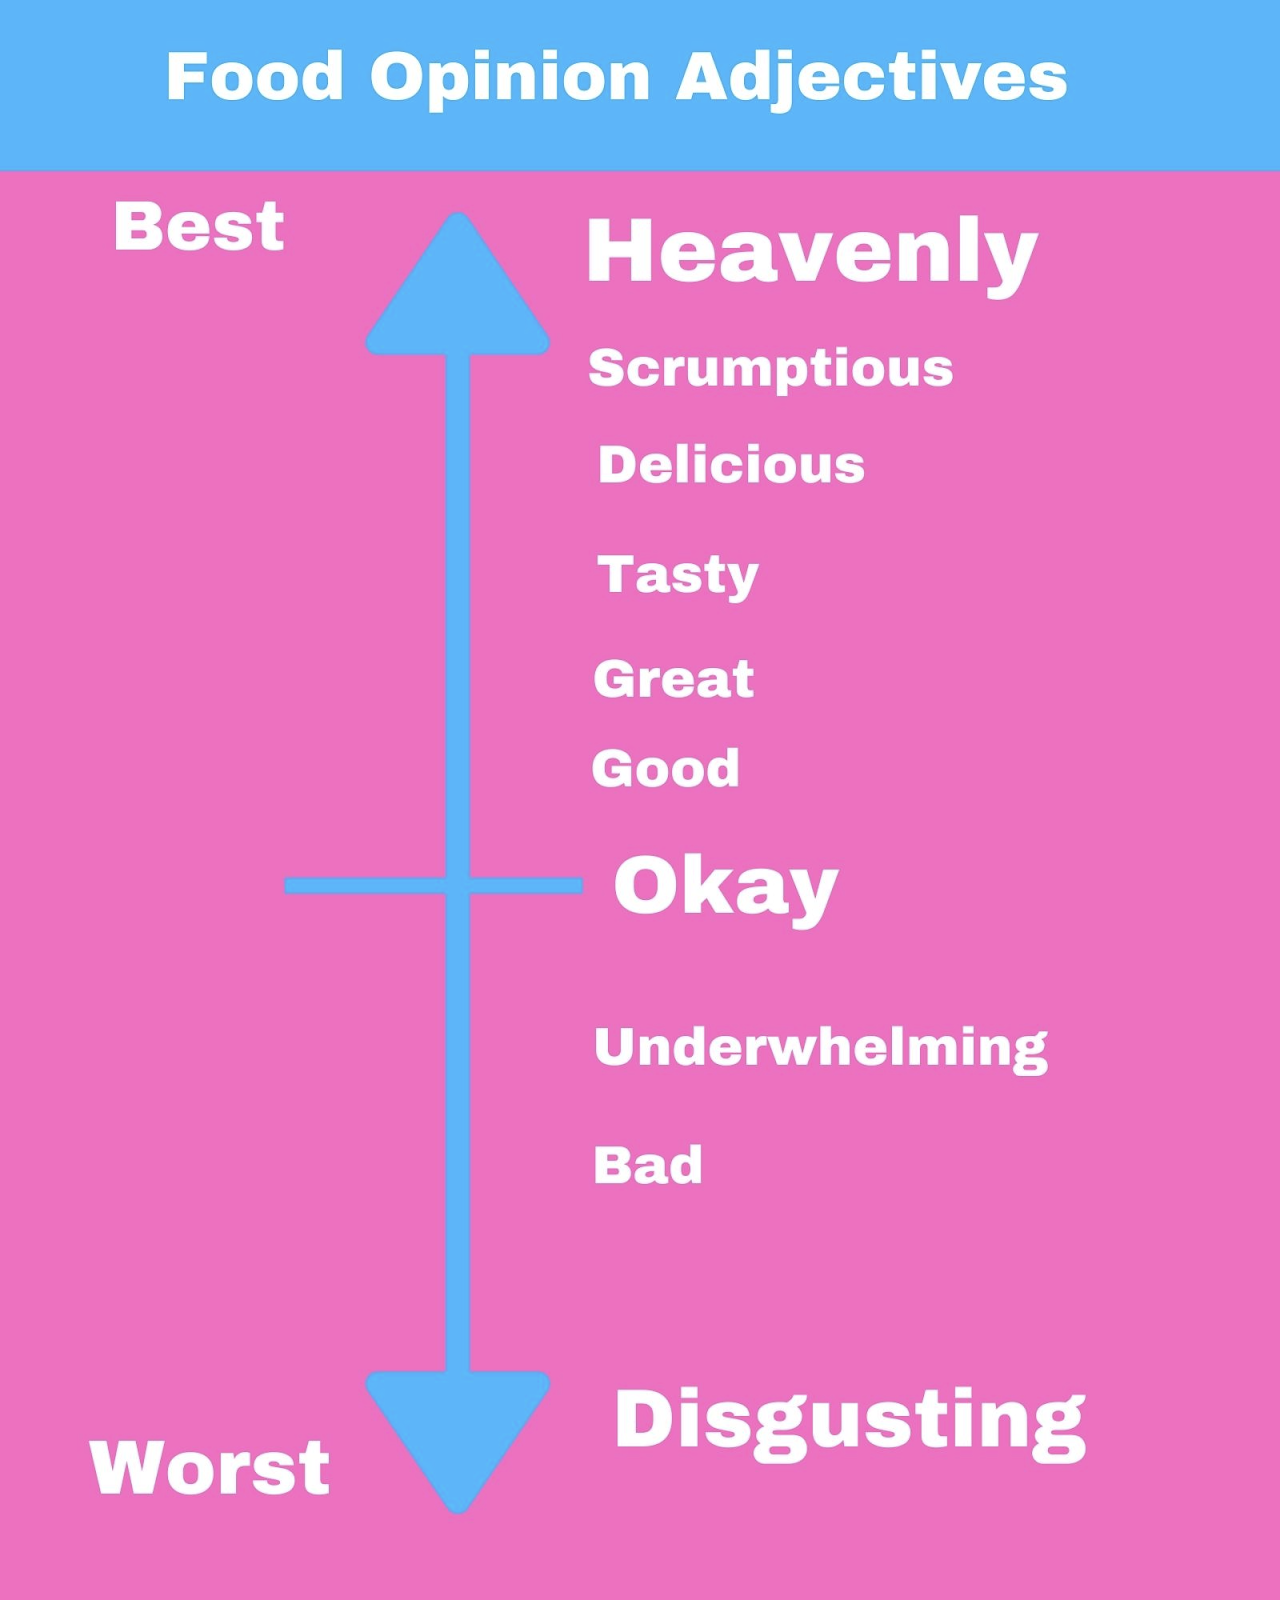 Food opinion adjectives